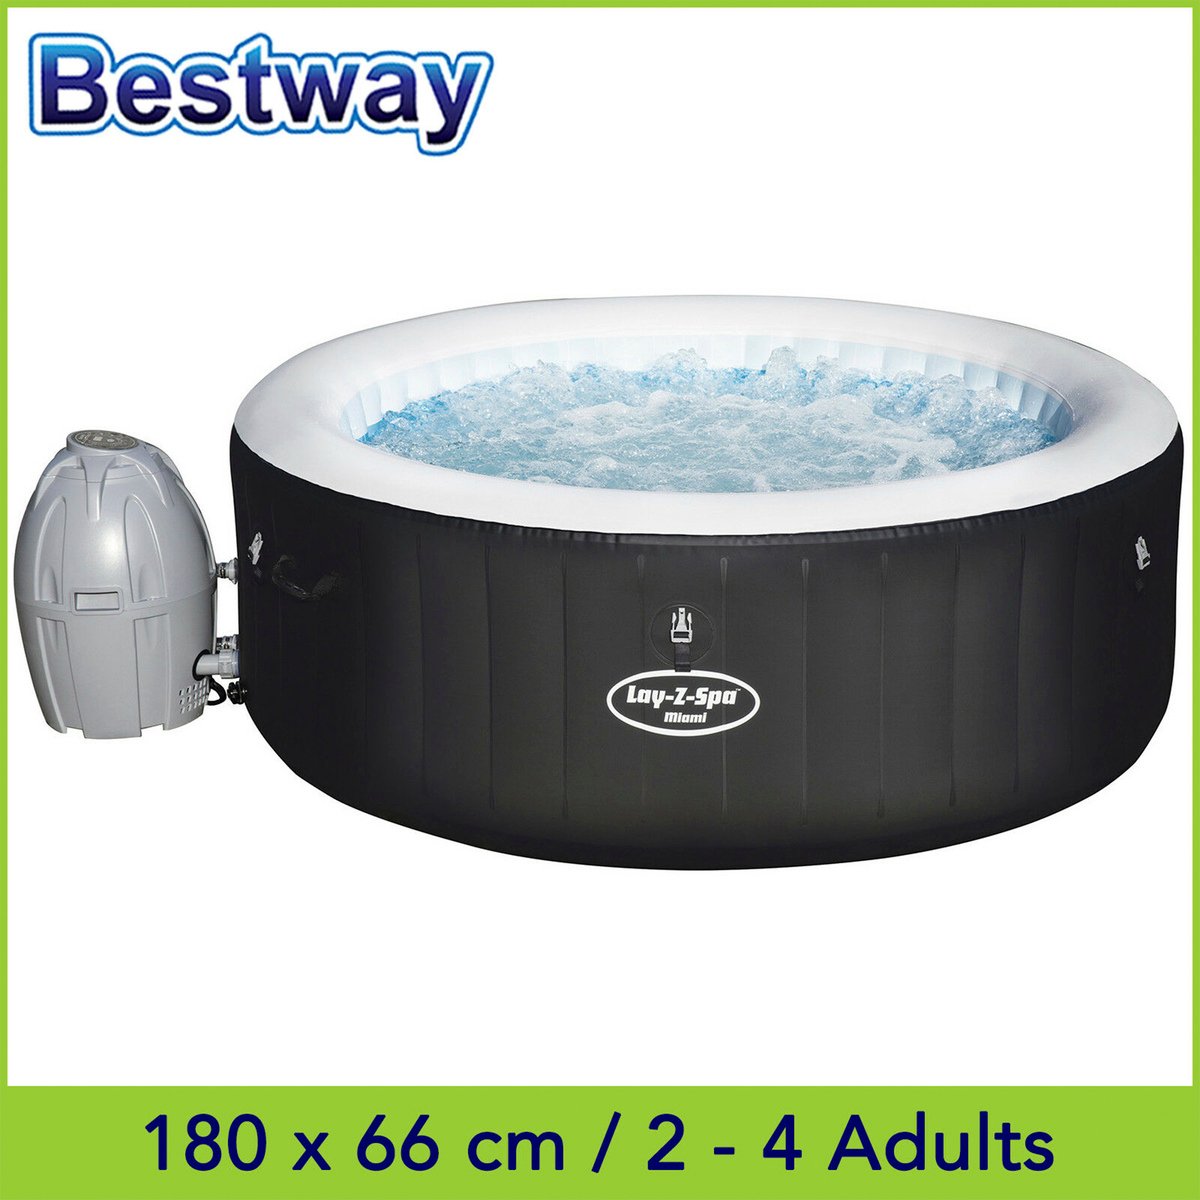 Bestway Lay-Z-Spa Miami Inflatable Hot Tub ,180 x 66 cm, 54123